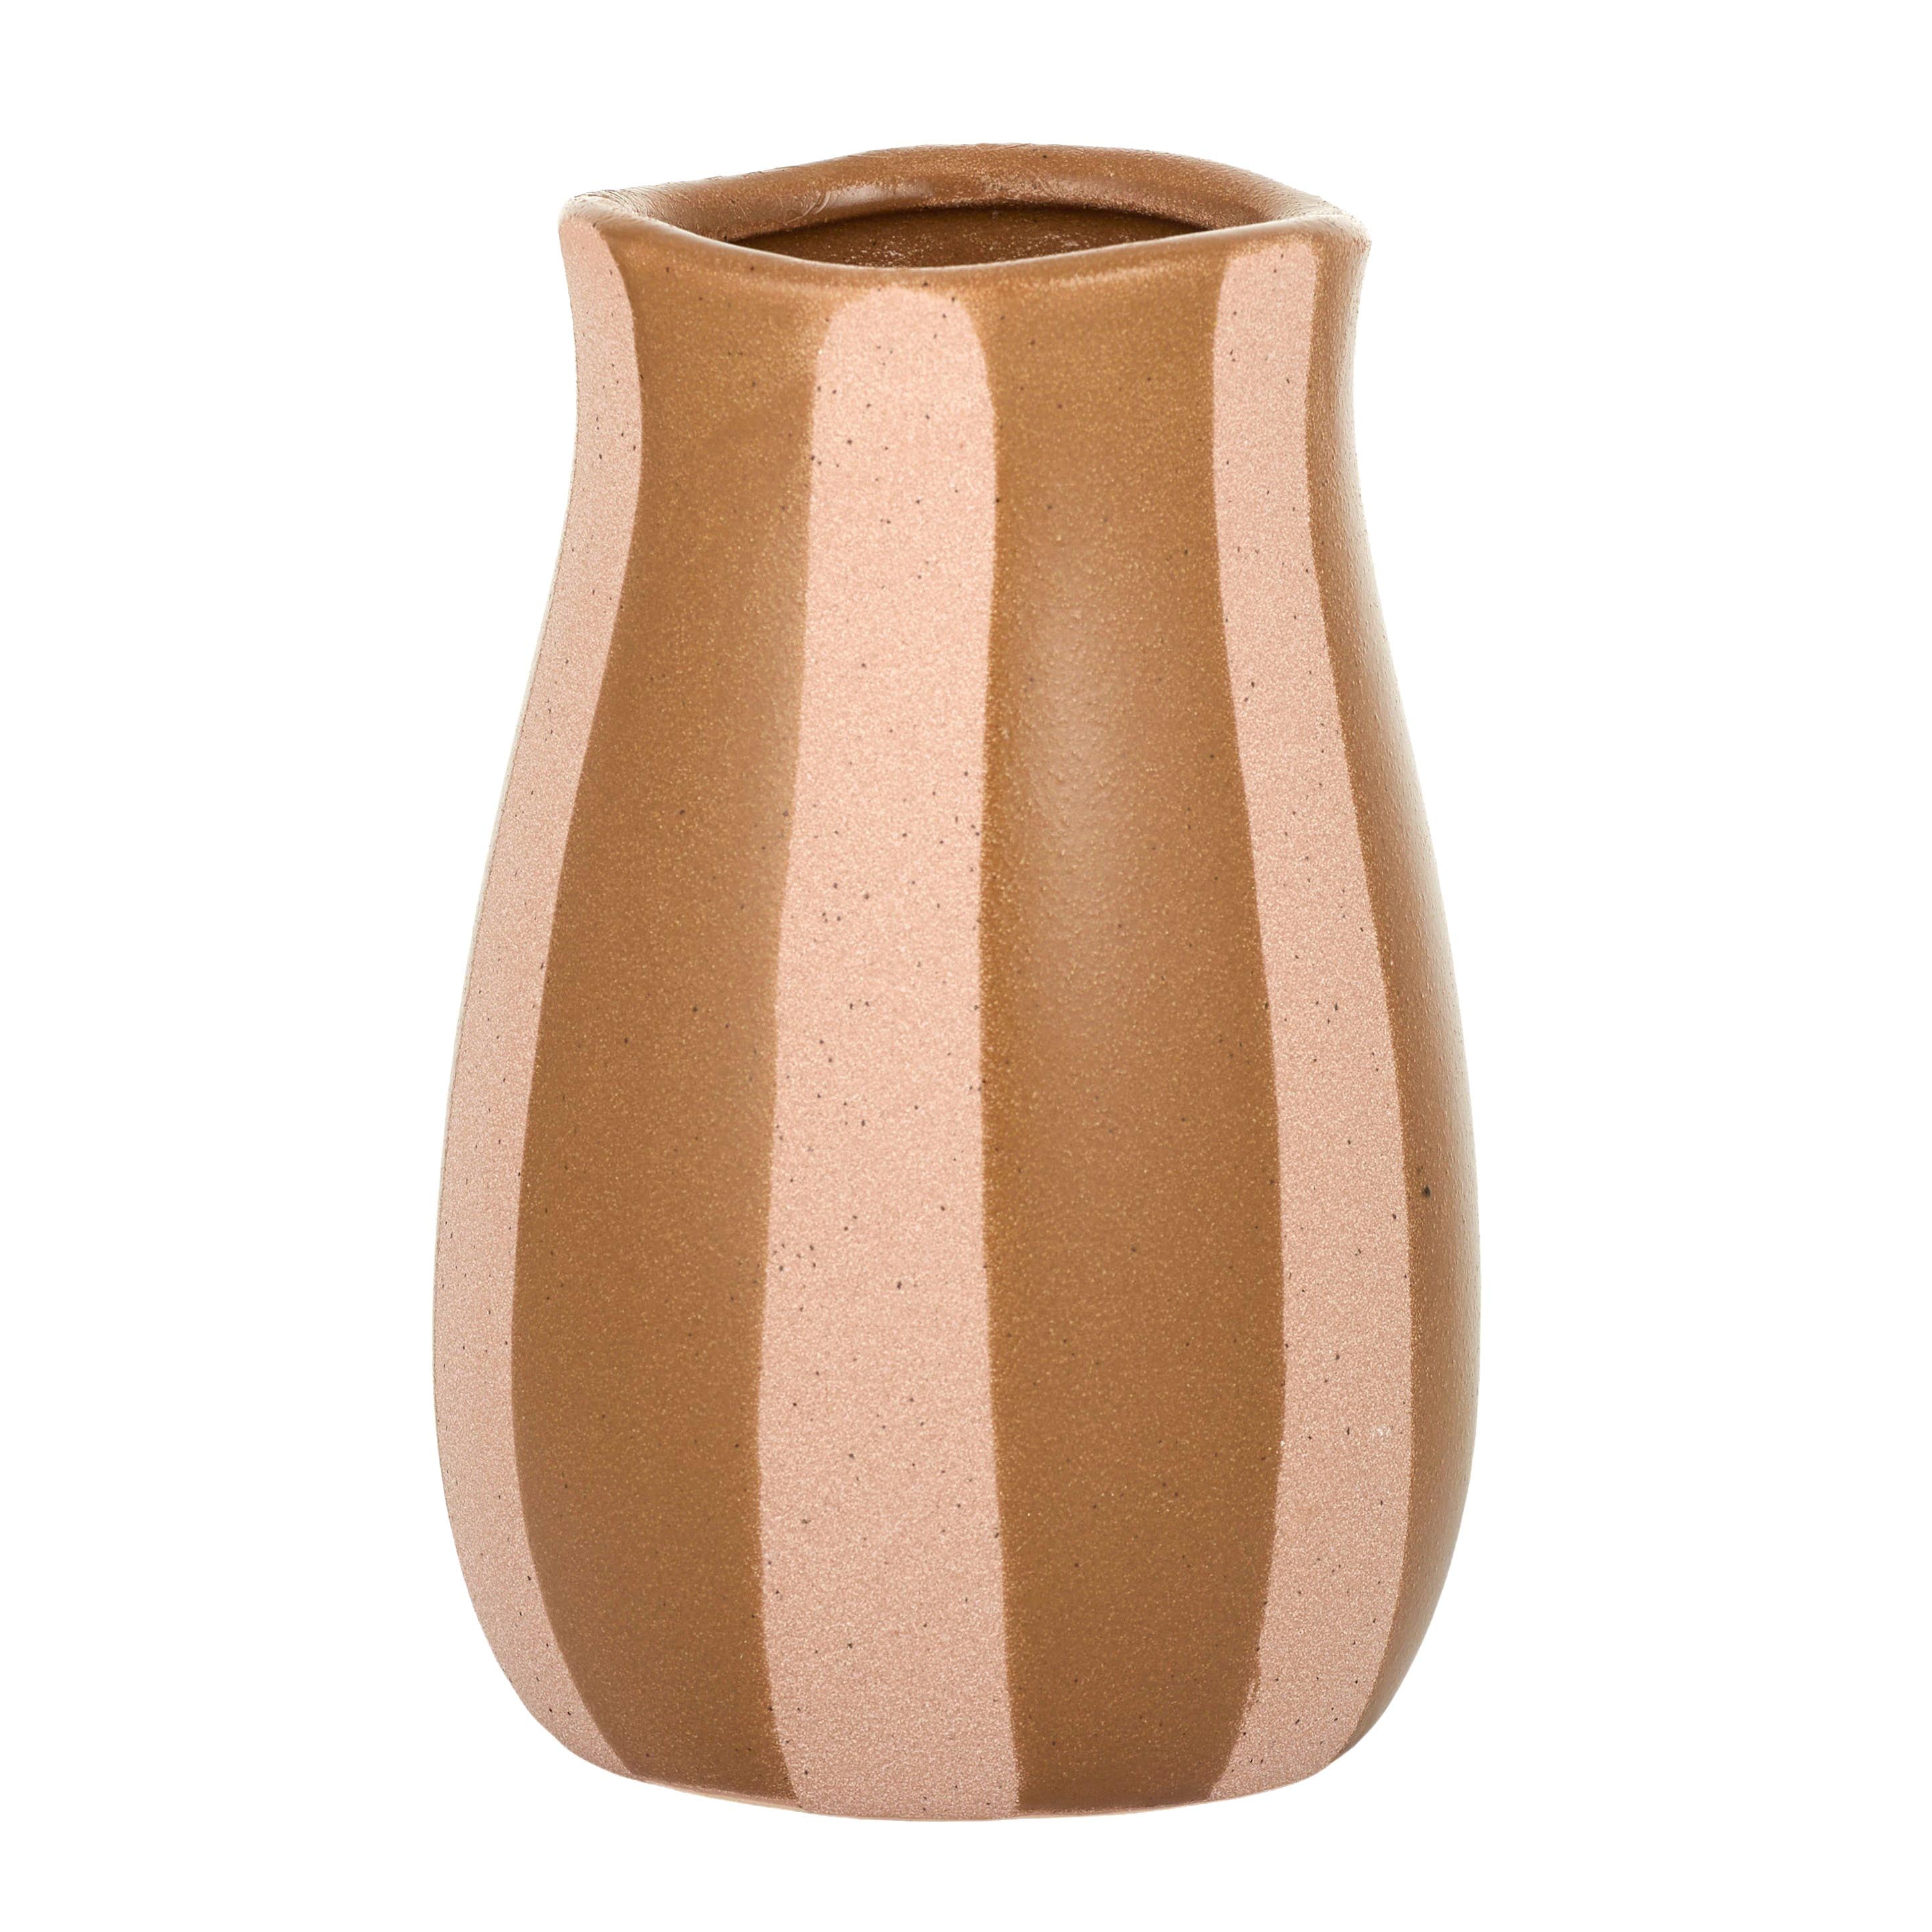 Blaze Ceramic Vase 18cm - Nude/Tan-Pots, Planters & Vases-Coast To Coast Home-The Bay Room